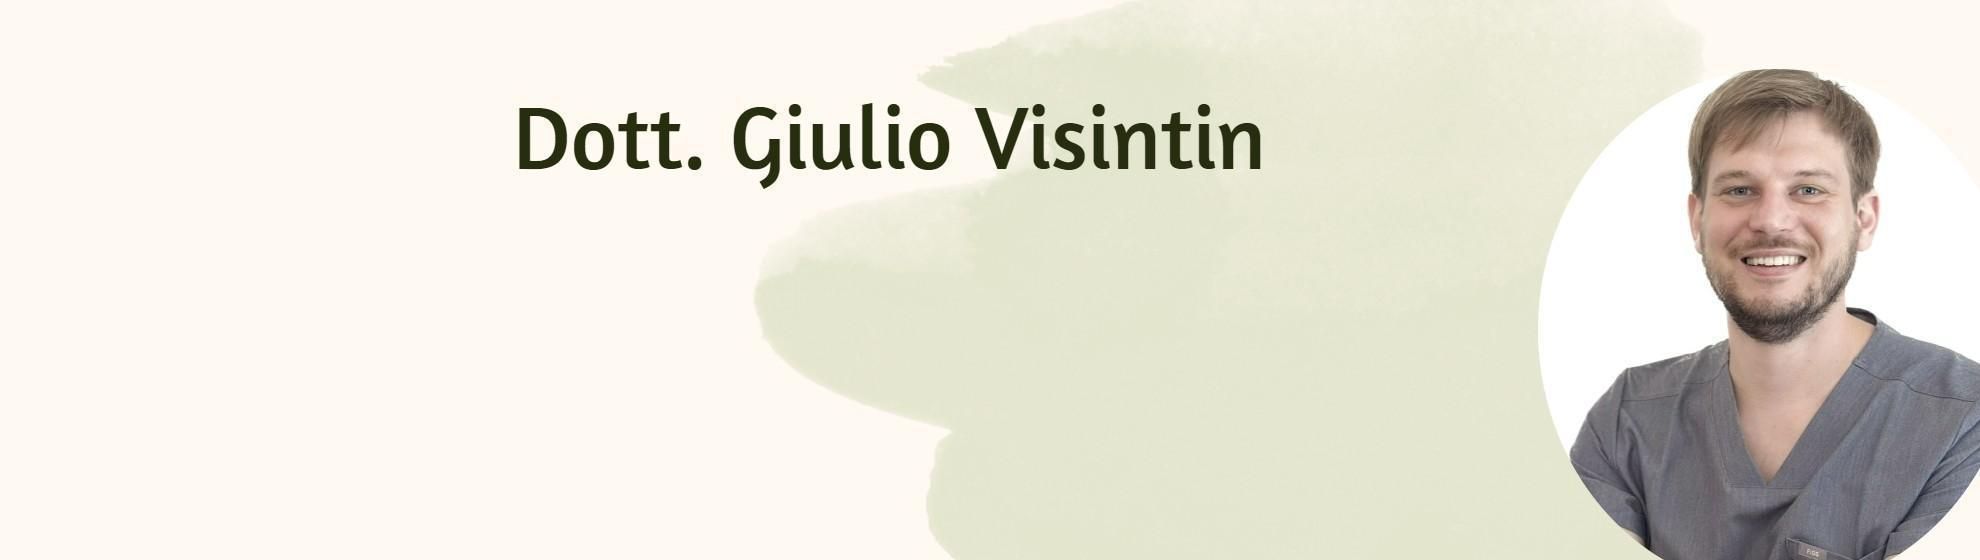 Dott. Giulio Visintin